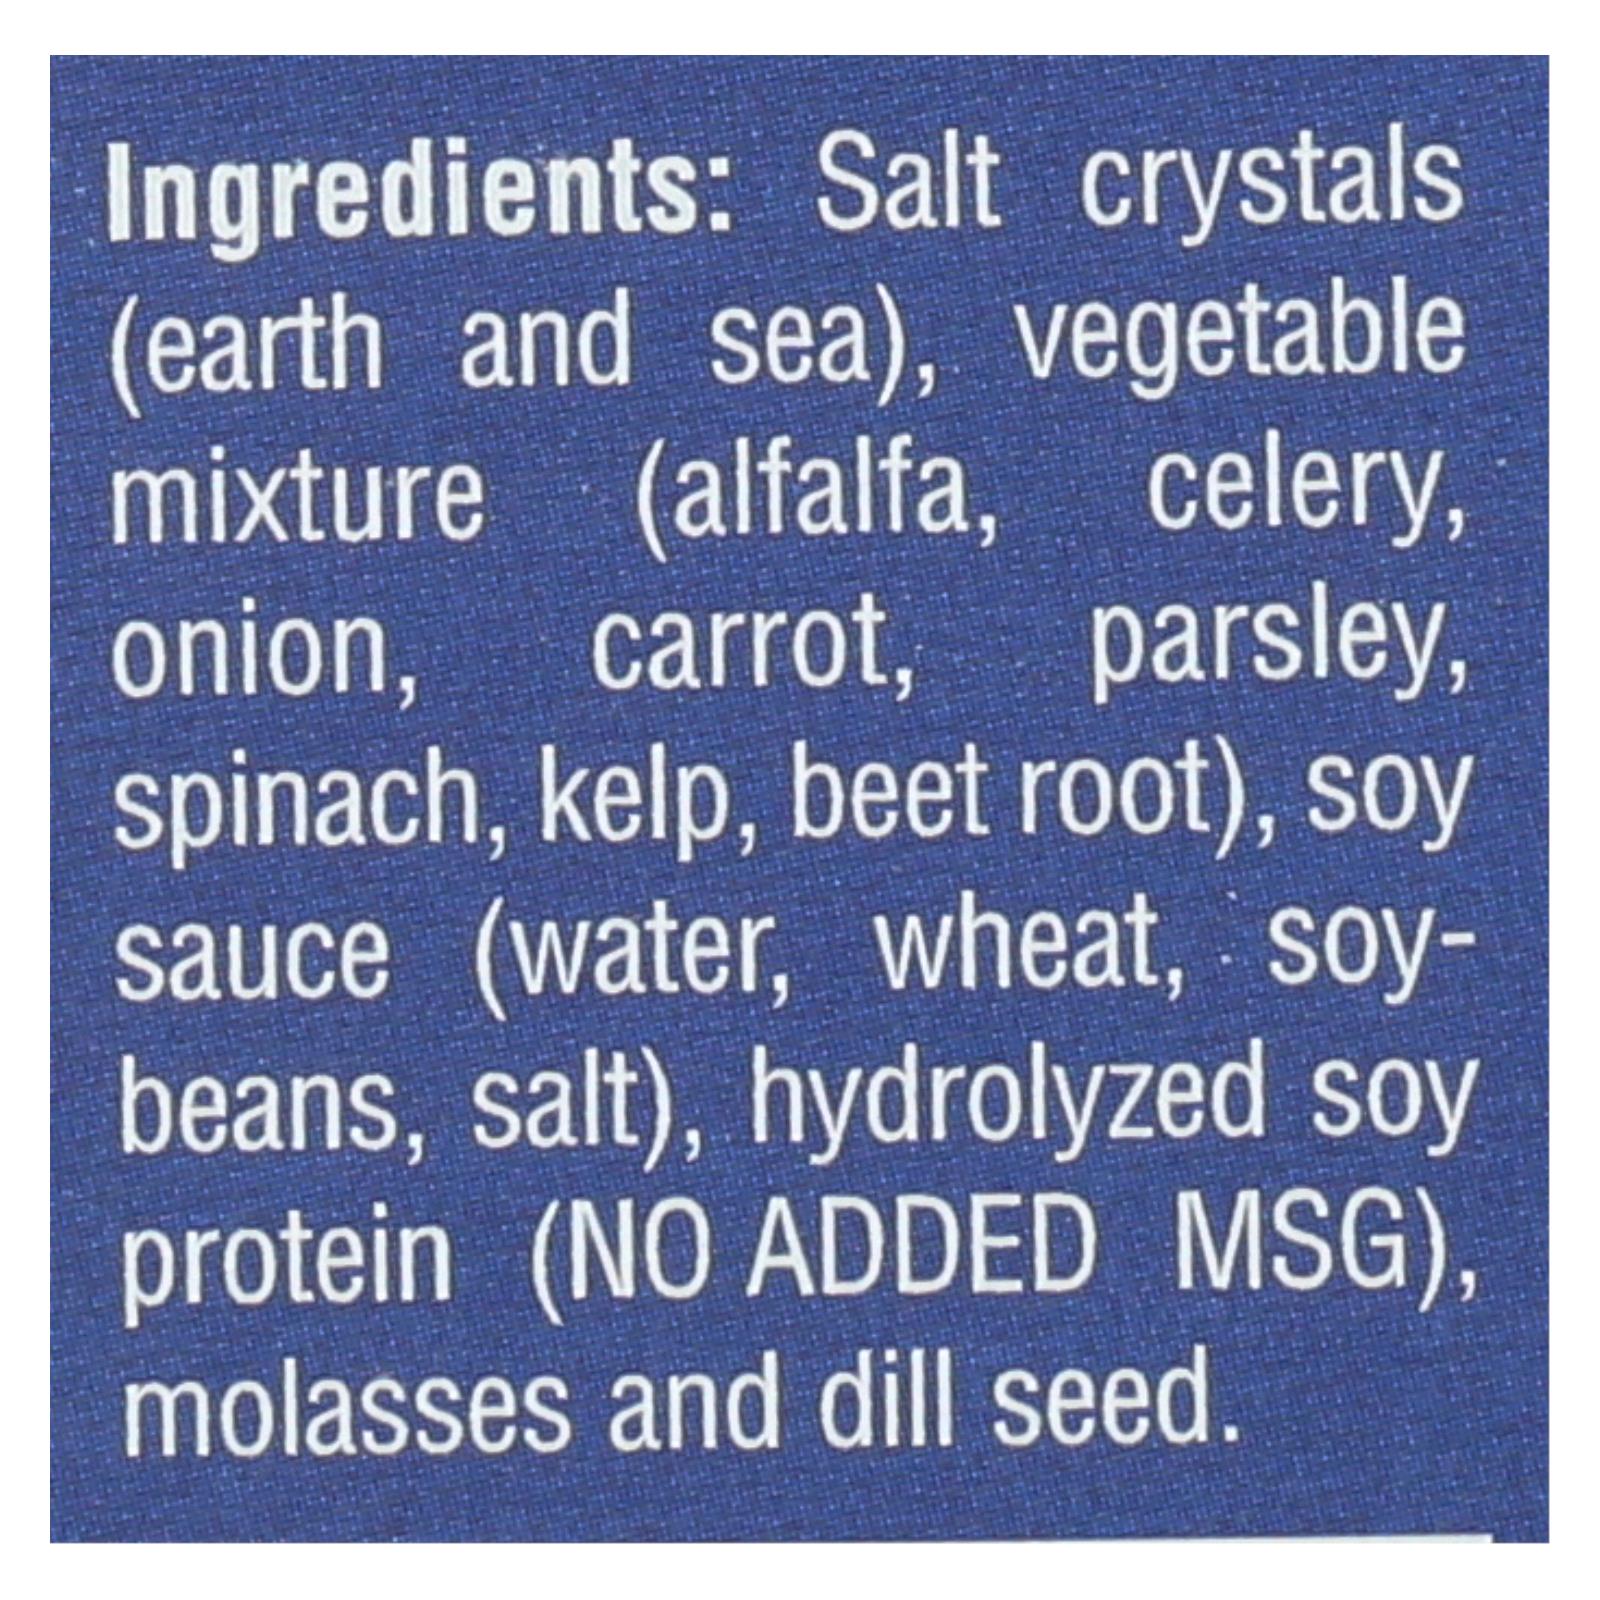 Modern Products Spike Gourmet Natural Seasoning - Vege Sal - Box - 20 Oz